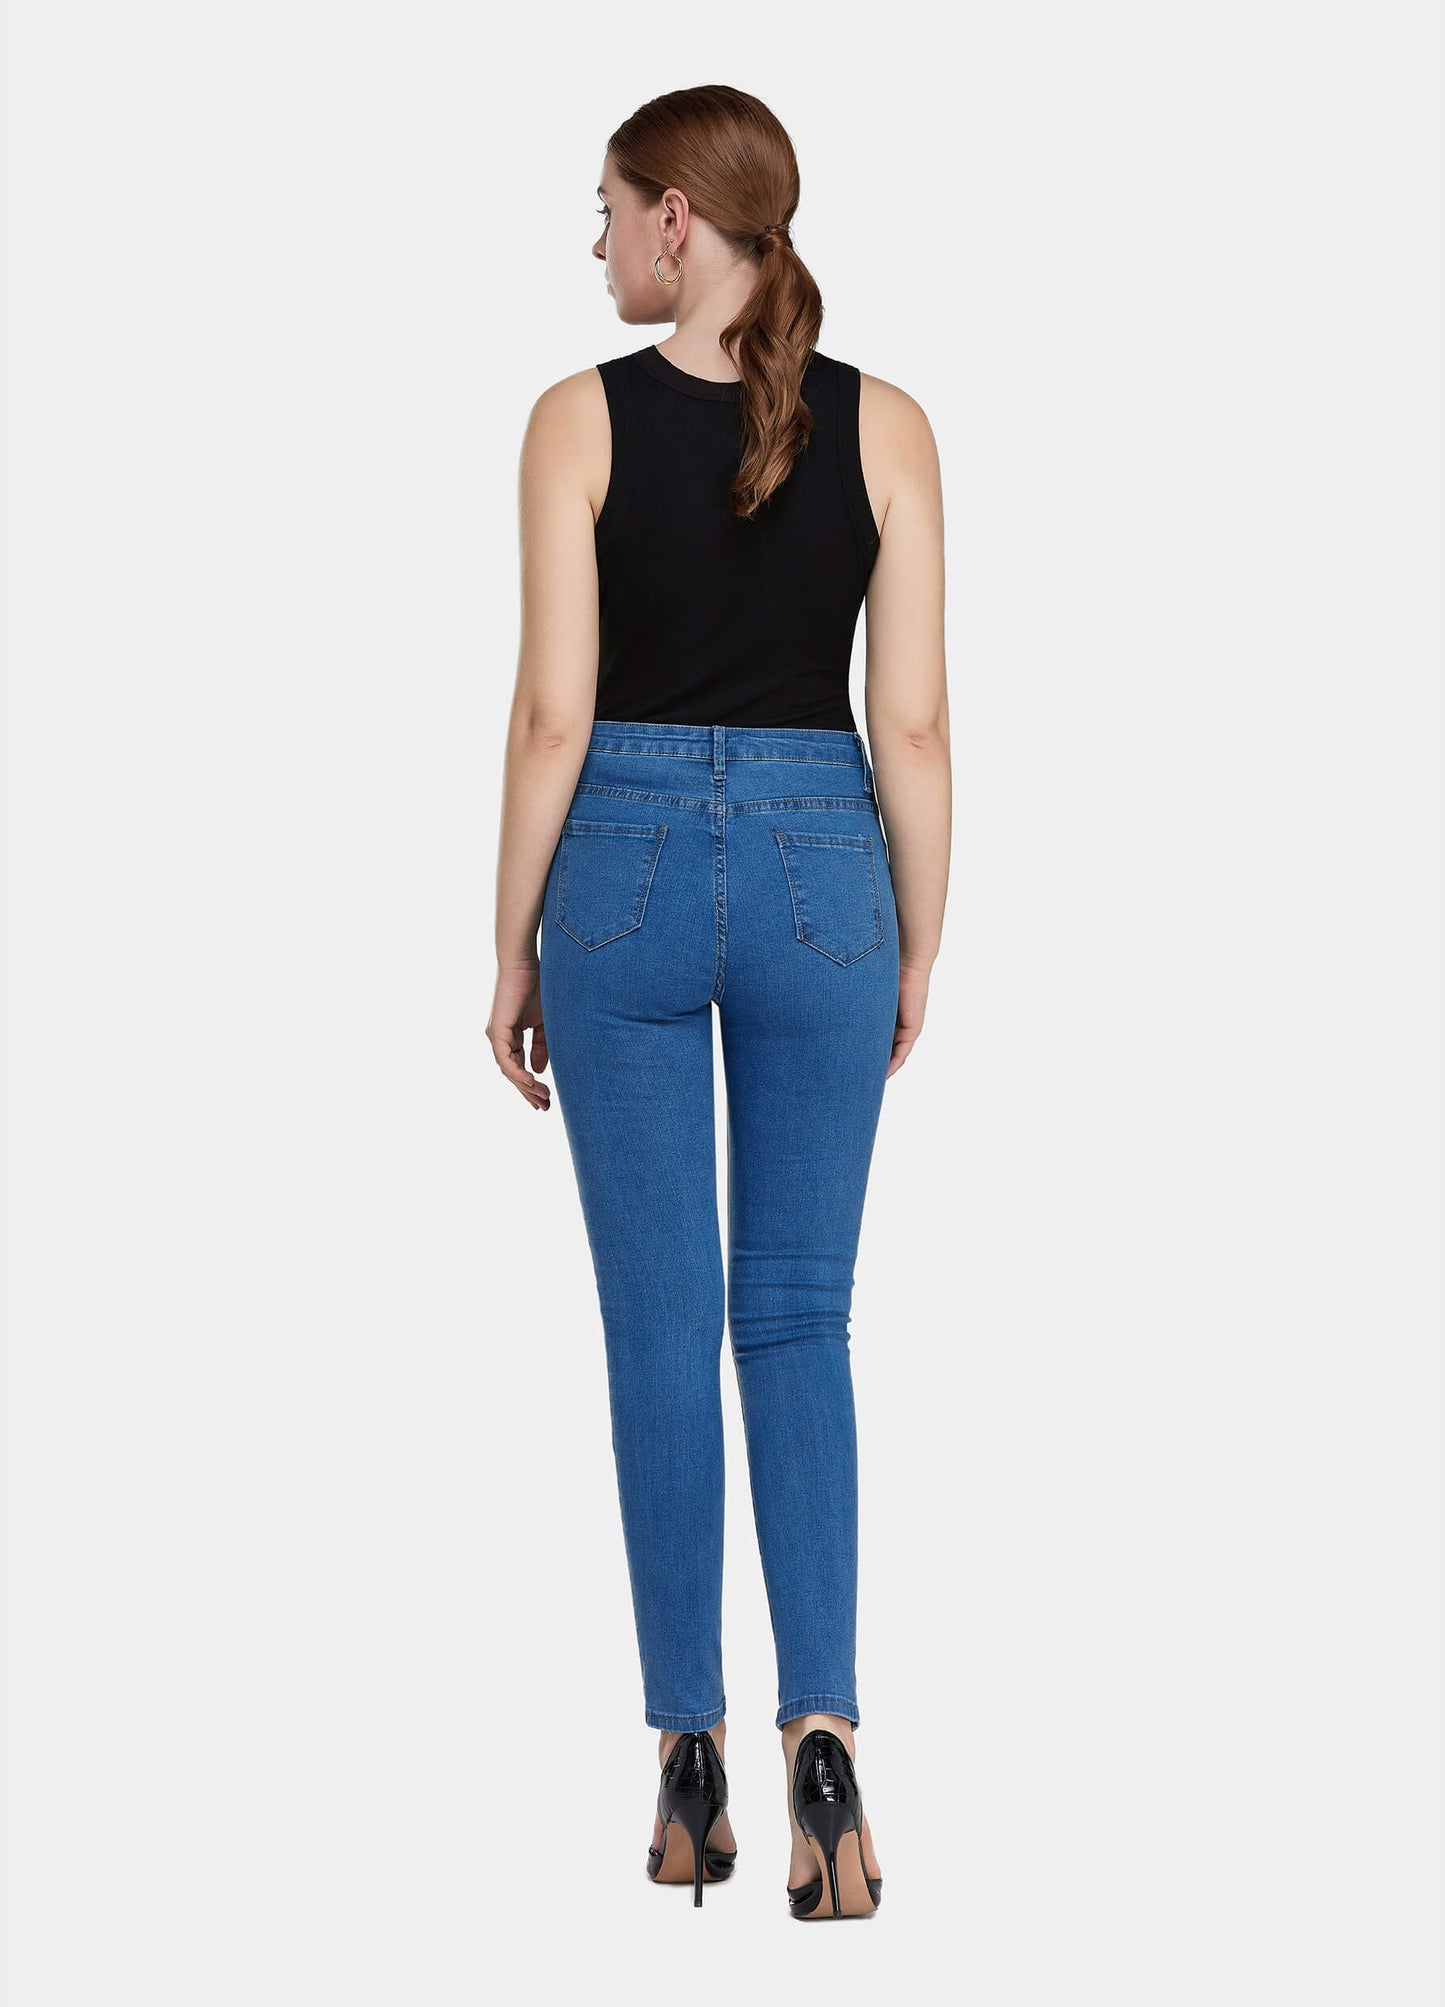 Women's High Waist Zip Fly Button Closure Skinny Jeans-Light Blue back view